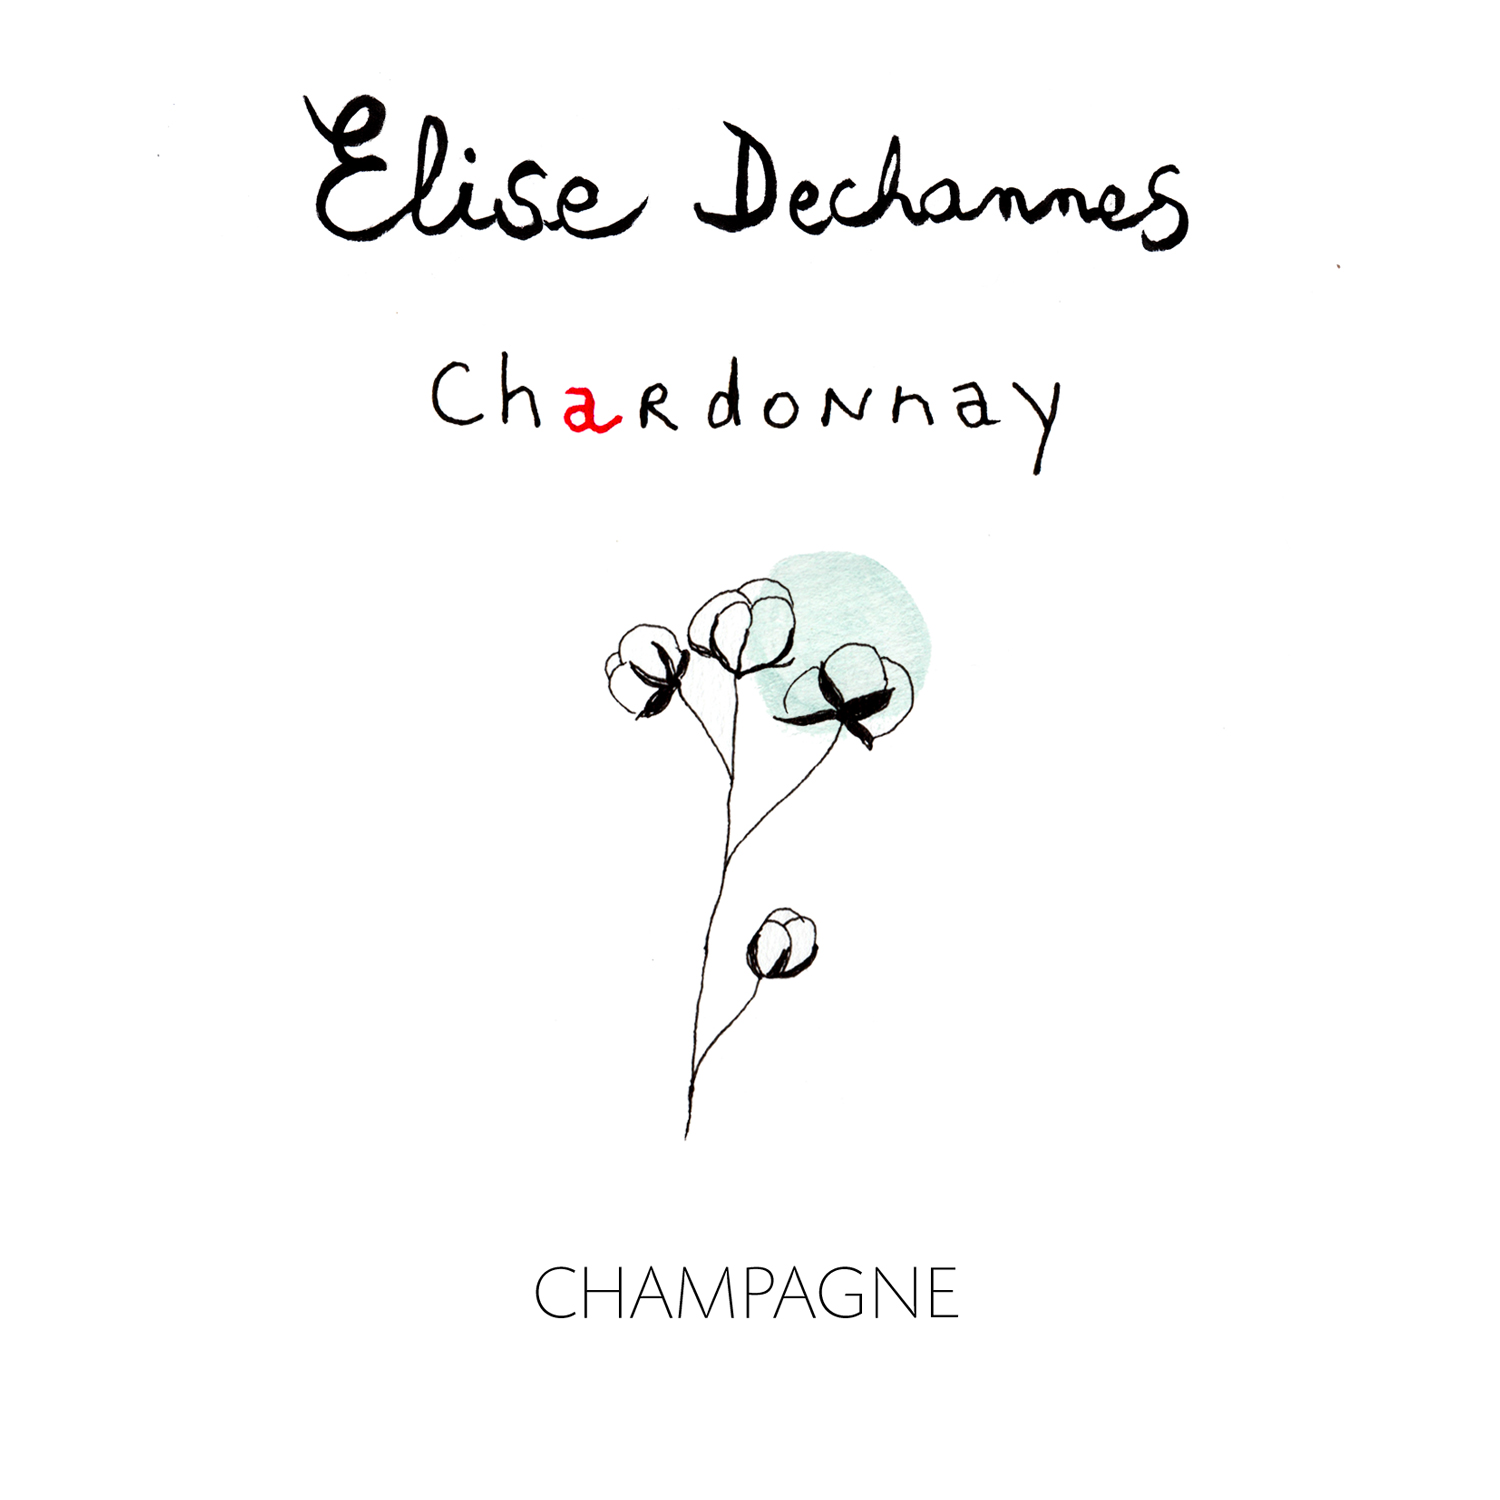 Champagne Elise Dechannes: Chardonnay - Extra Brut